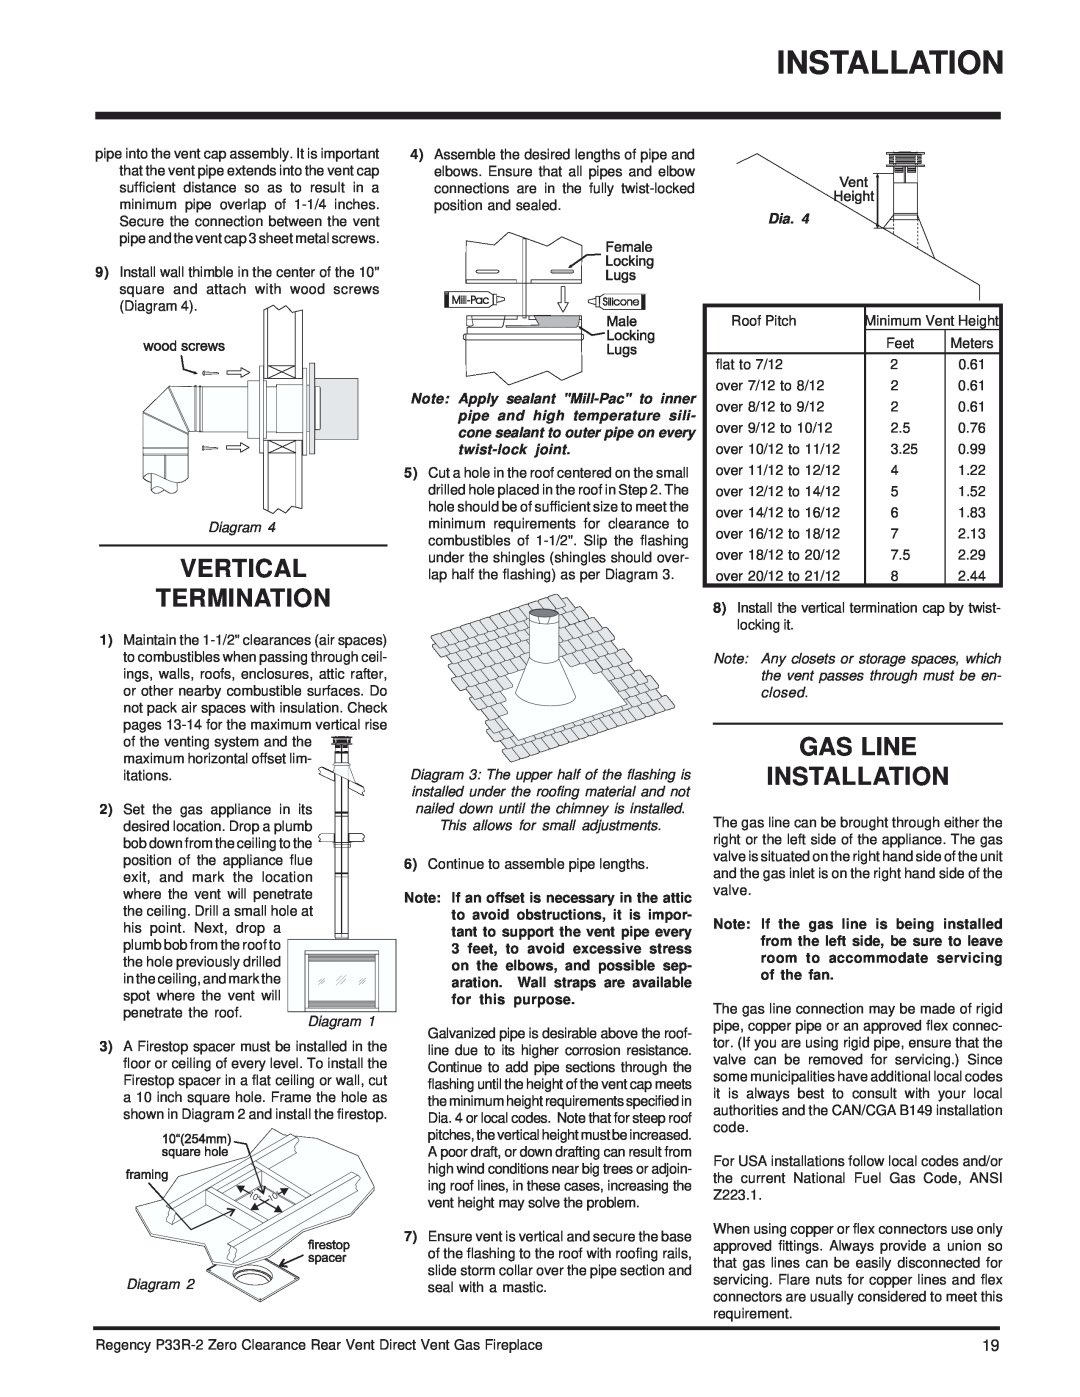 Regency P33R-NG2, P33R-LP2 installation manual Vertical Termination, Gas Line Installation, Dia 